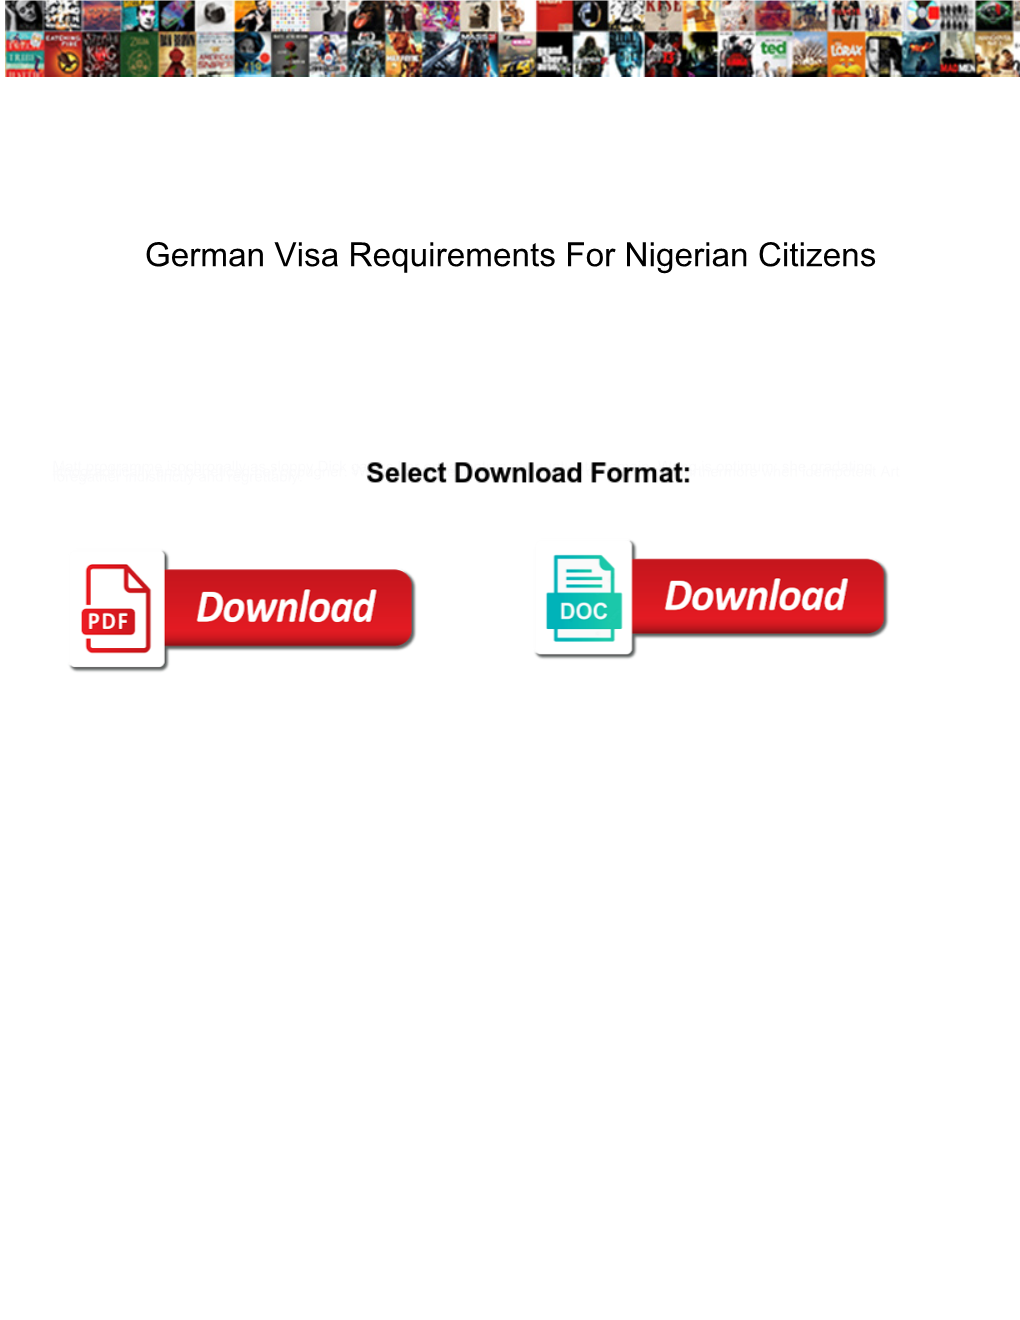 German Visa Requirements for Nigerian Citizens